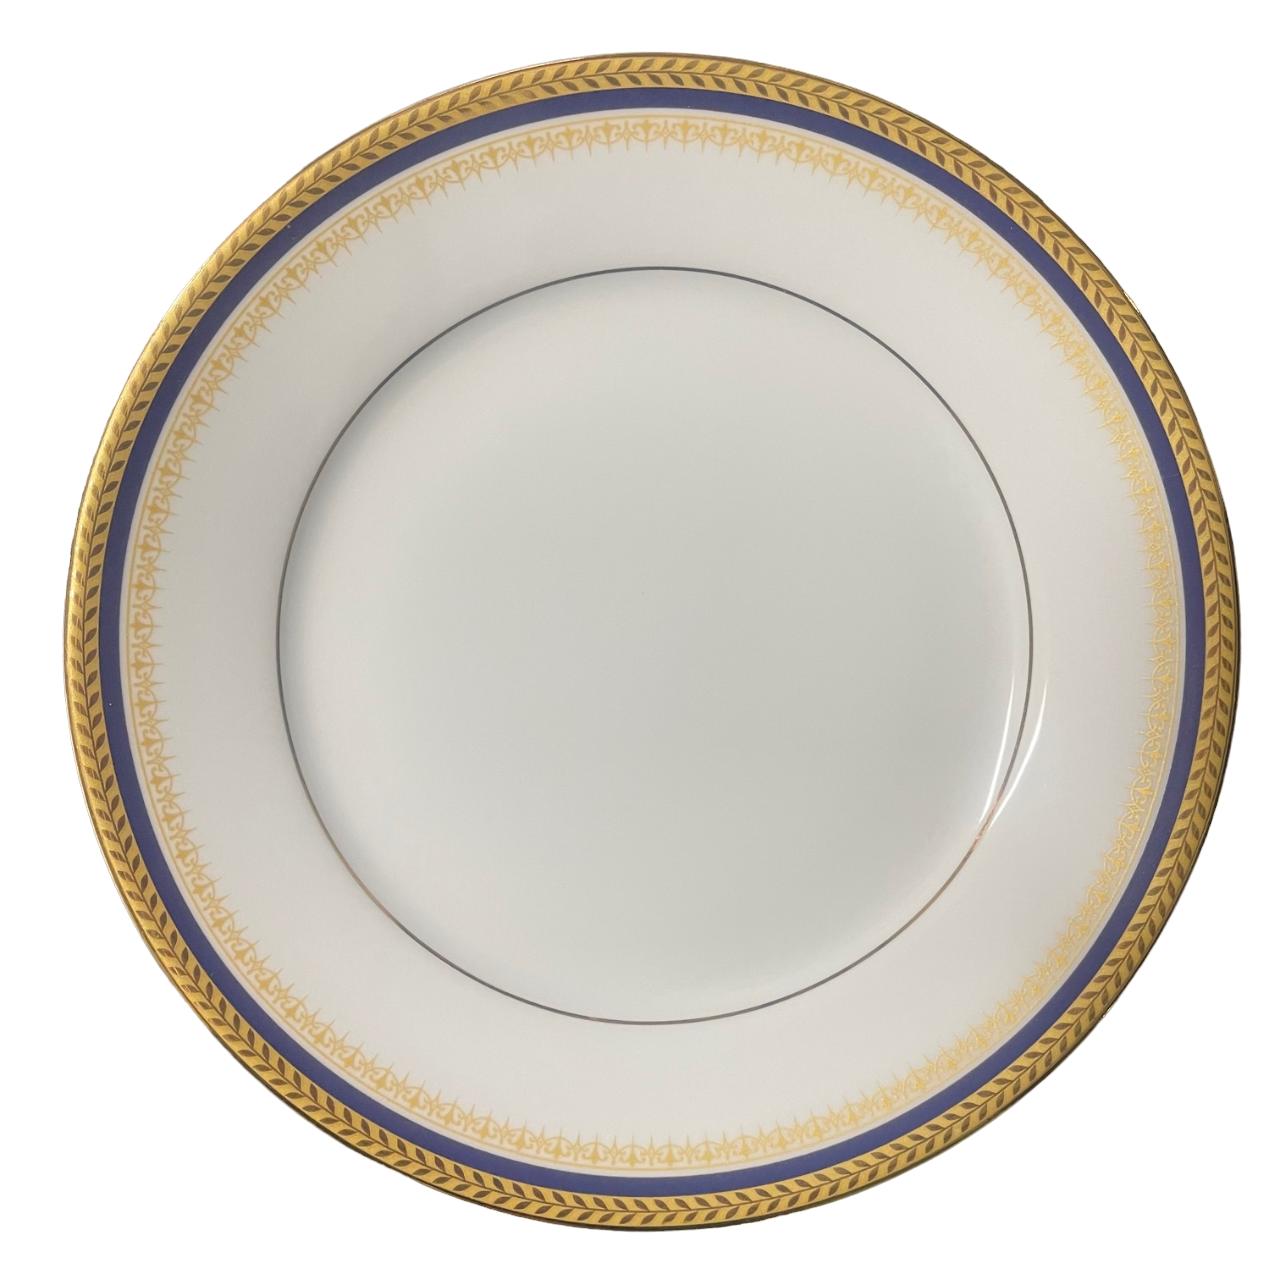 Monaco bleu - Charger plate 30 cm